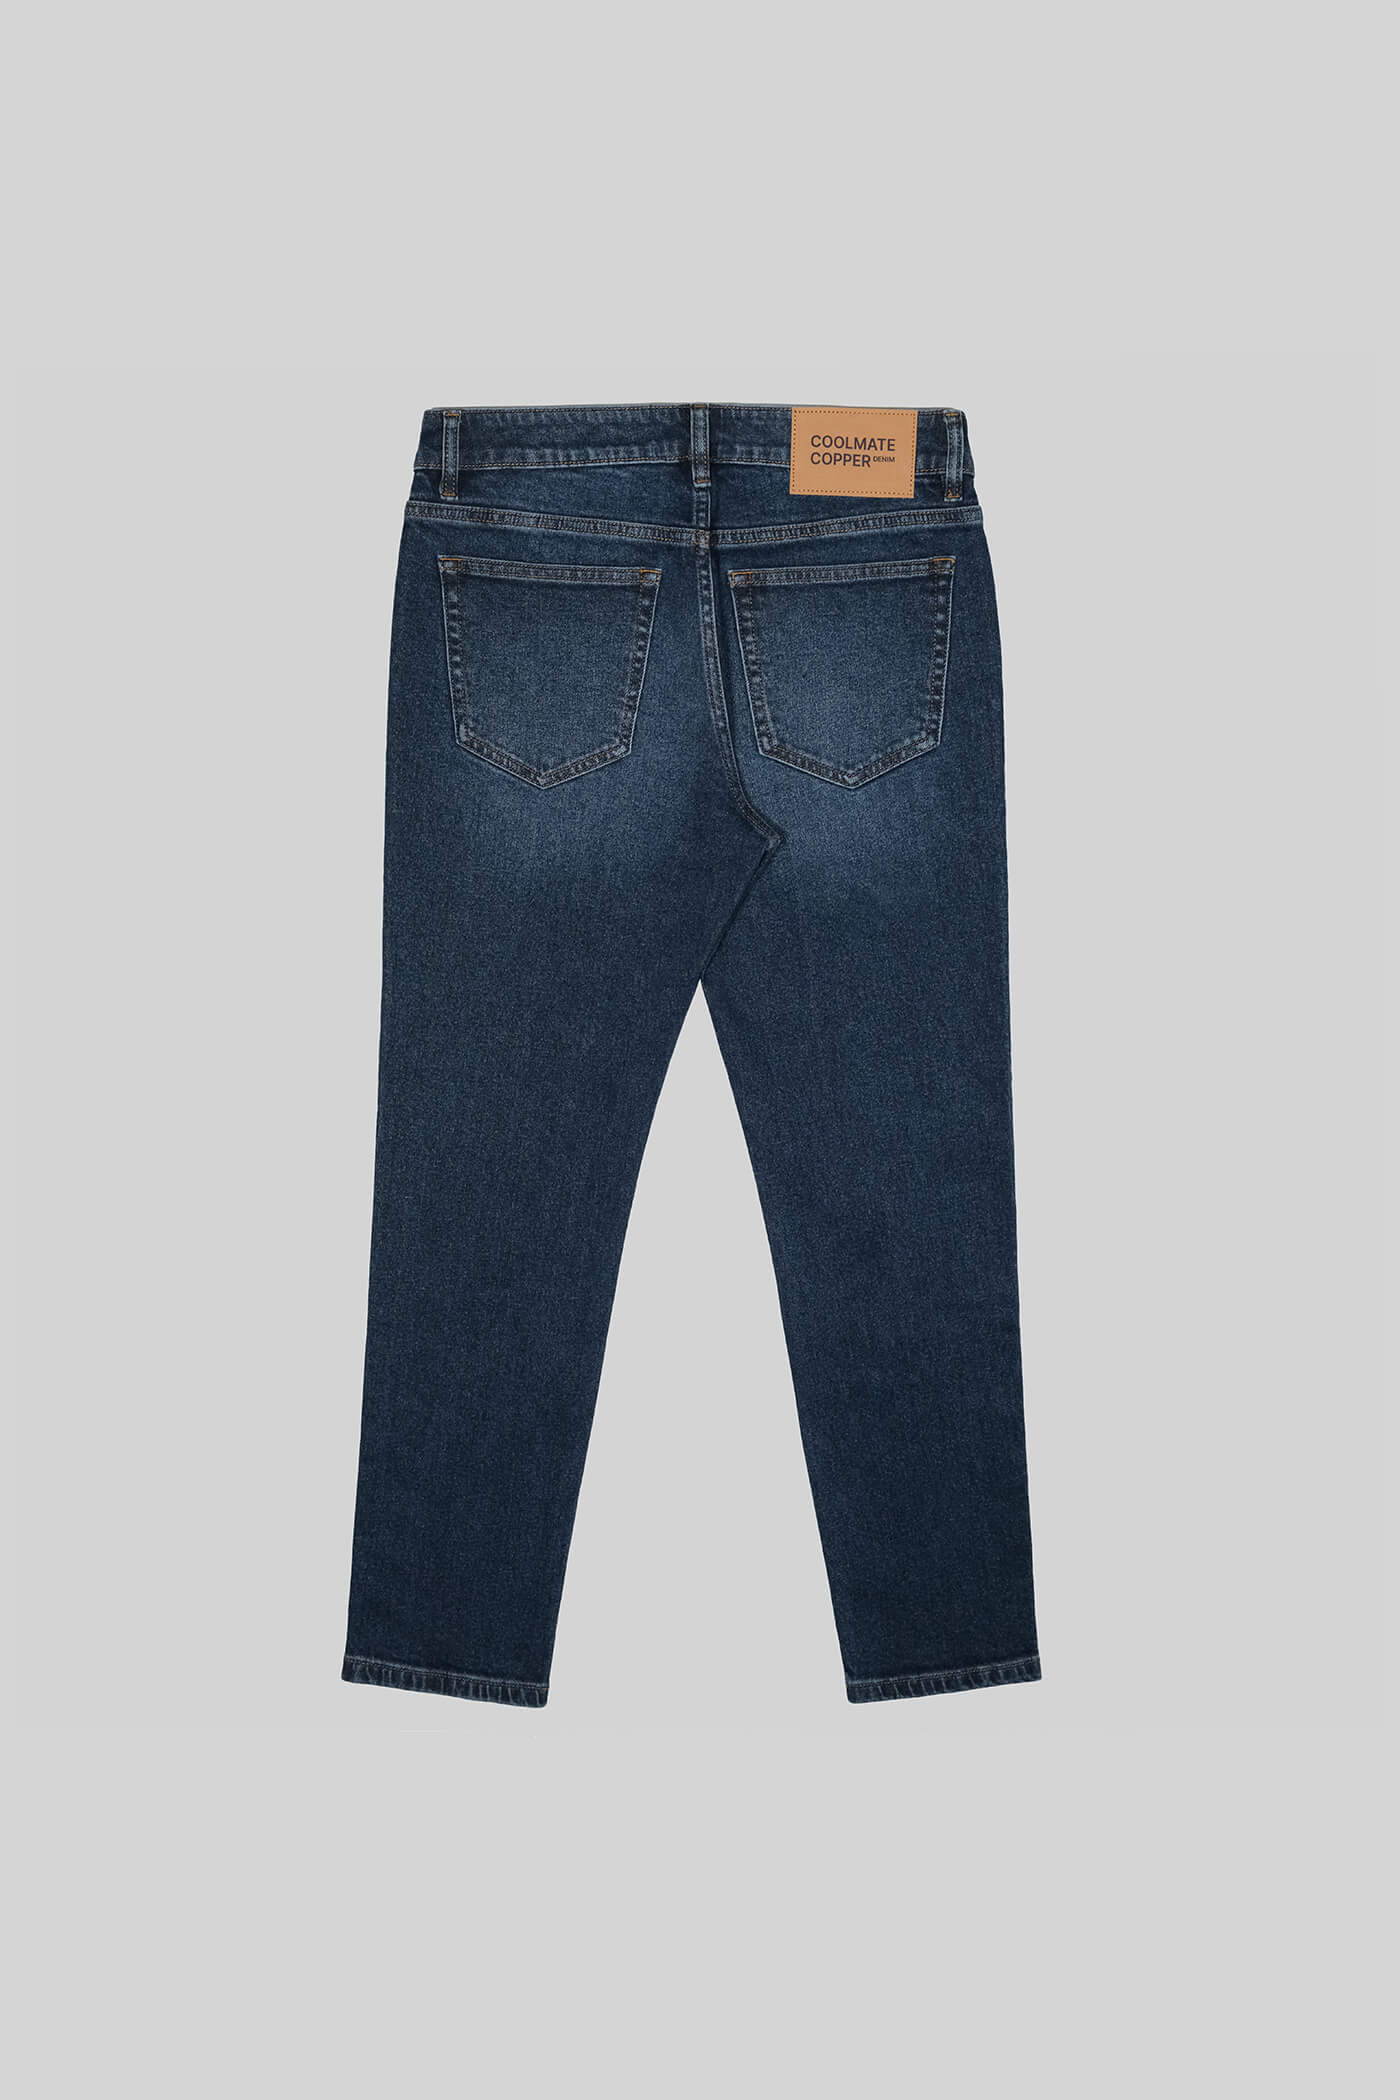 Jeans Copper Denim Slim Fit xanh-dam 2